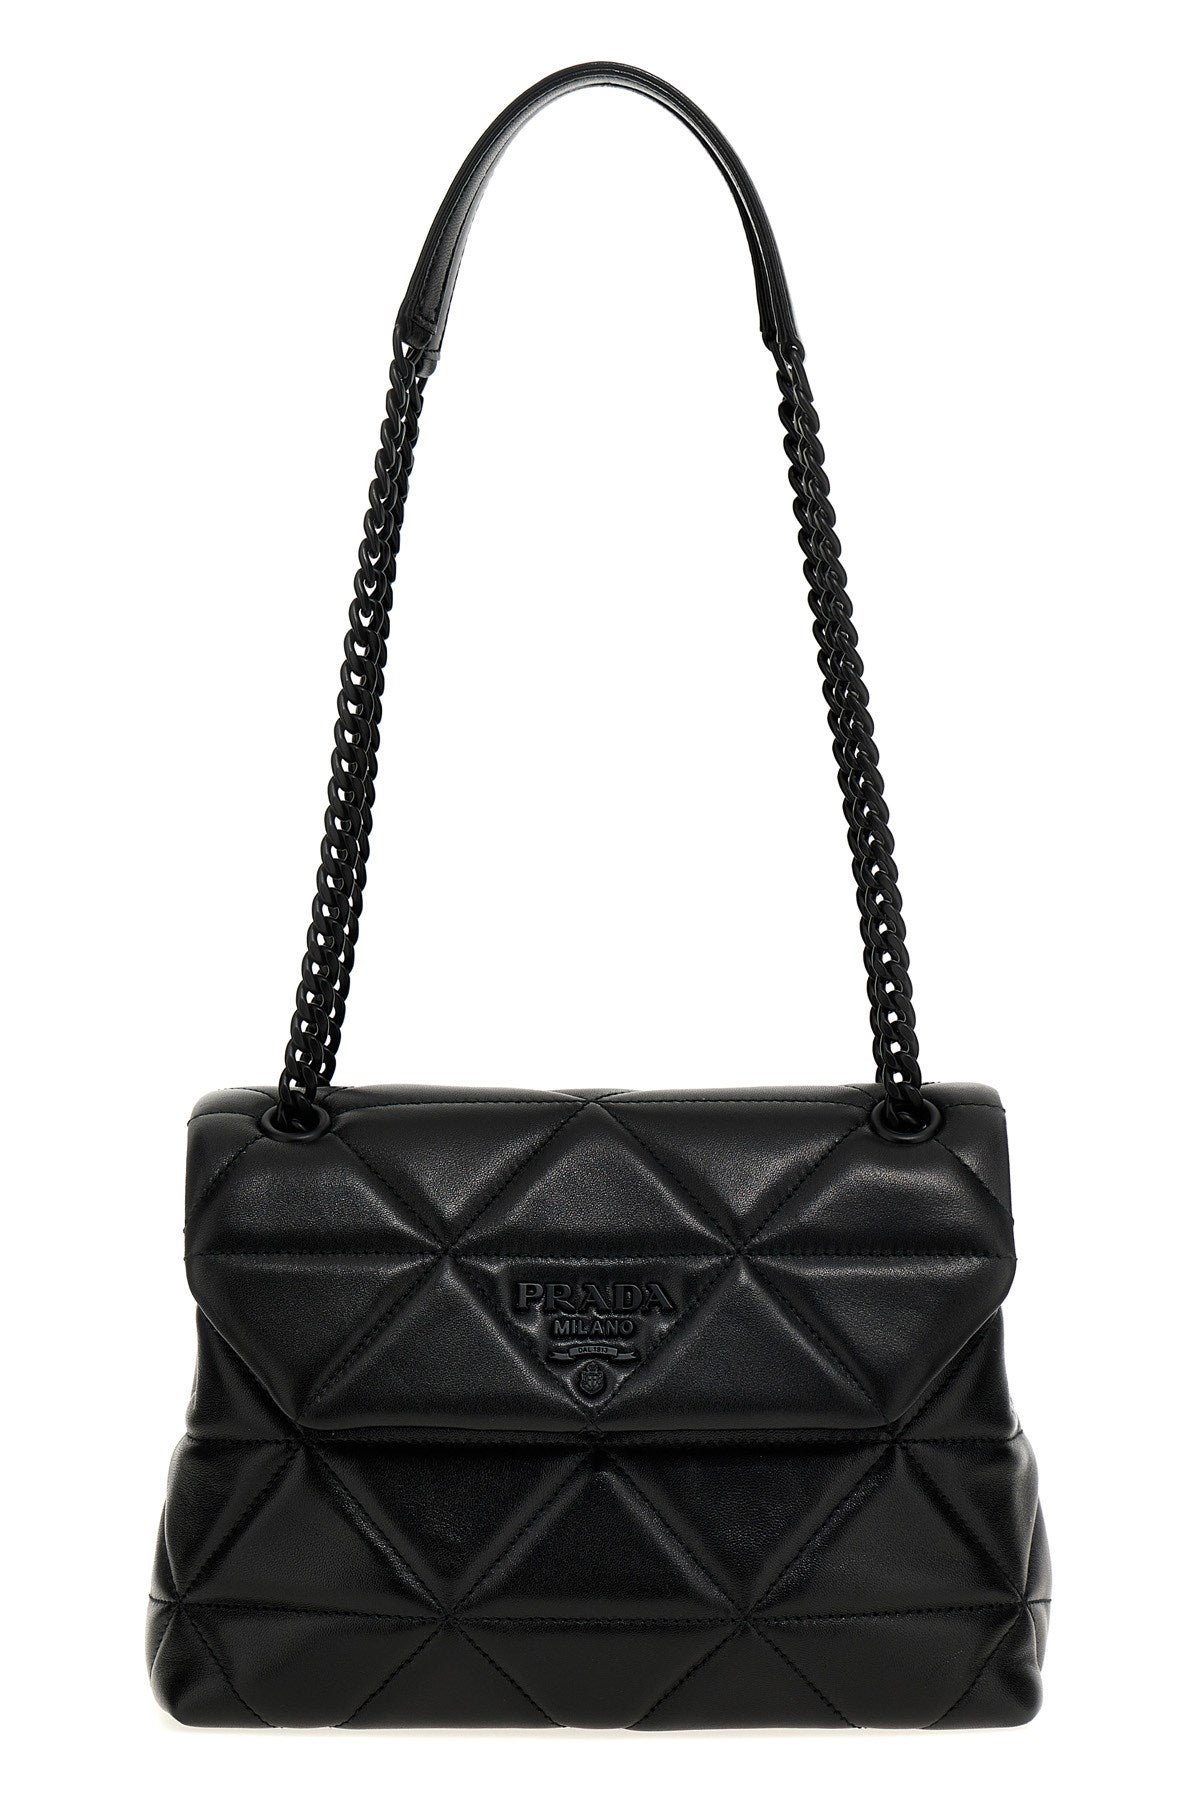 Prada Women ' Spectrum' Small Shoulder Bag In Black